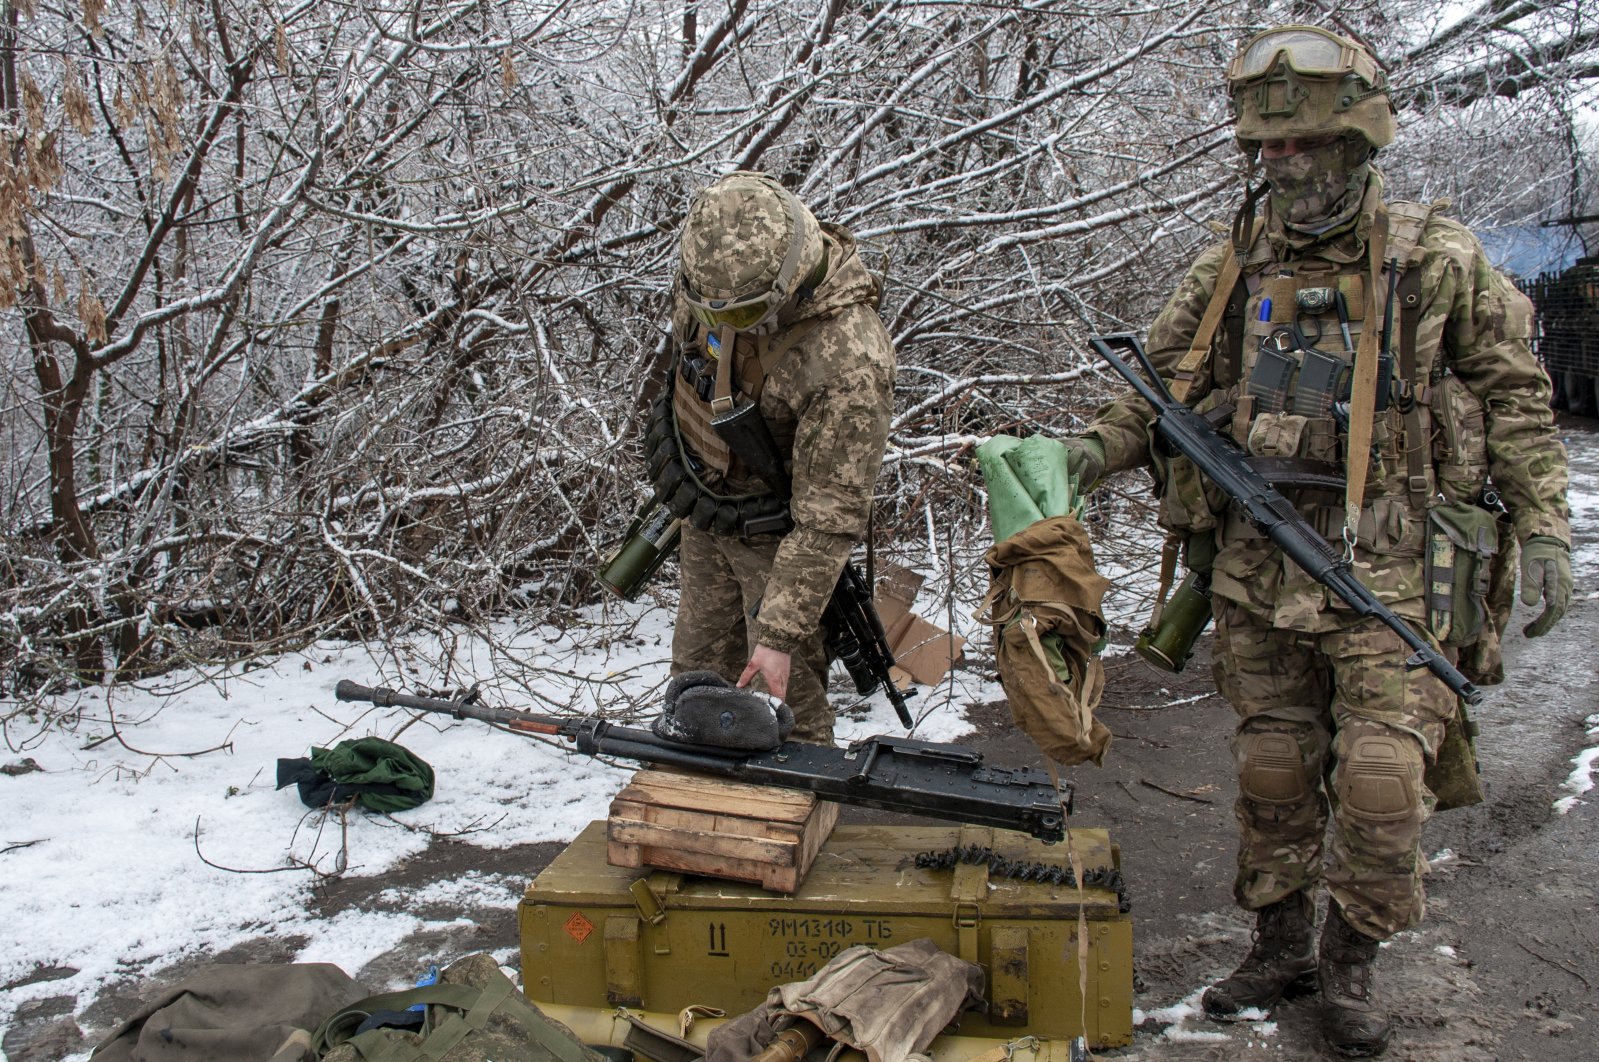 Ukrainian soldiers handle equipment outside Kharkiv, Ukraine, Feb. 26, 2022. (AP Photo)